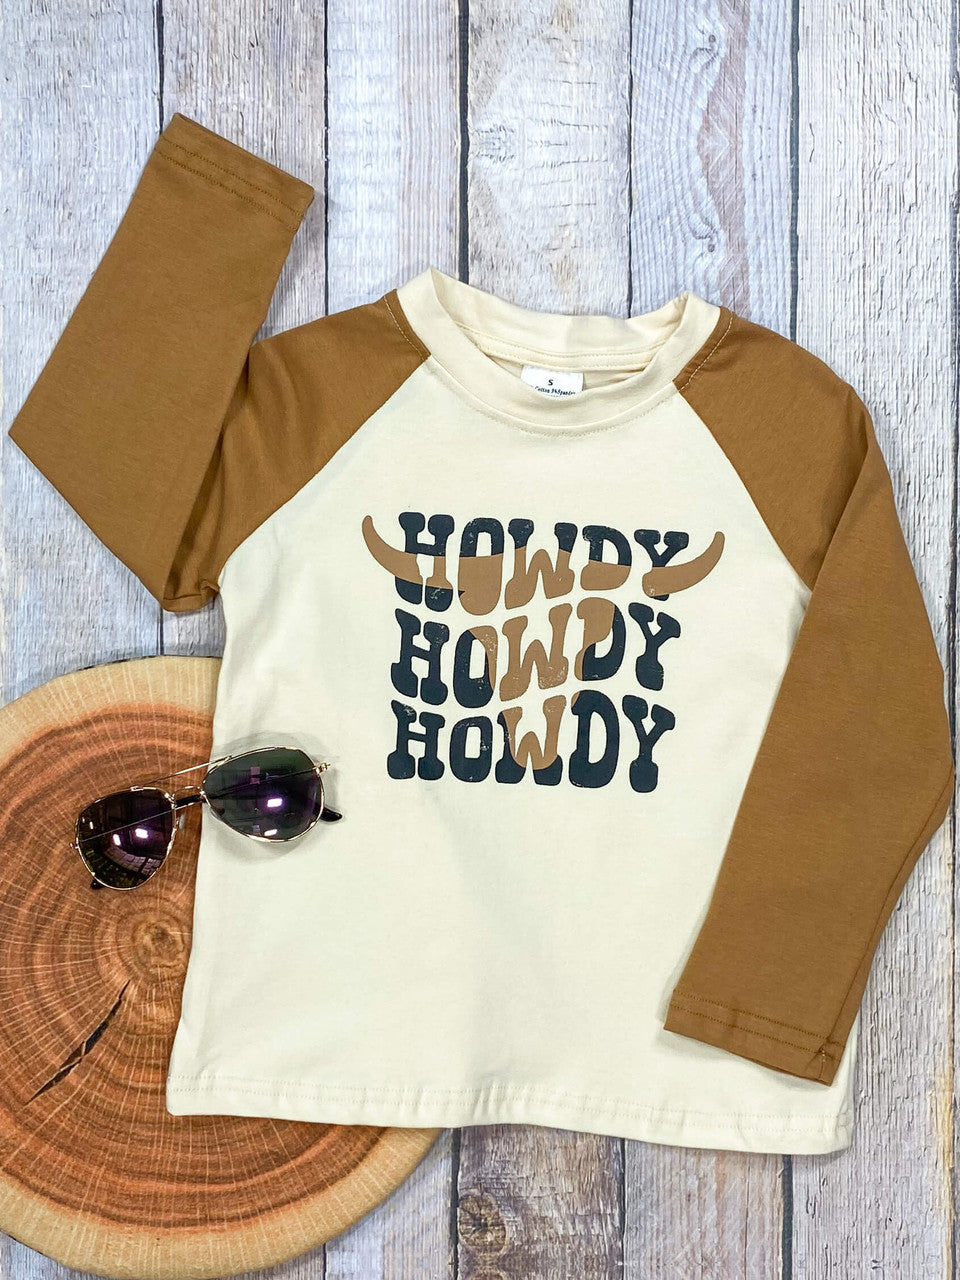 Tan raglan-sleeve style longhorn Howdy sweater